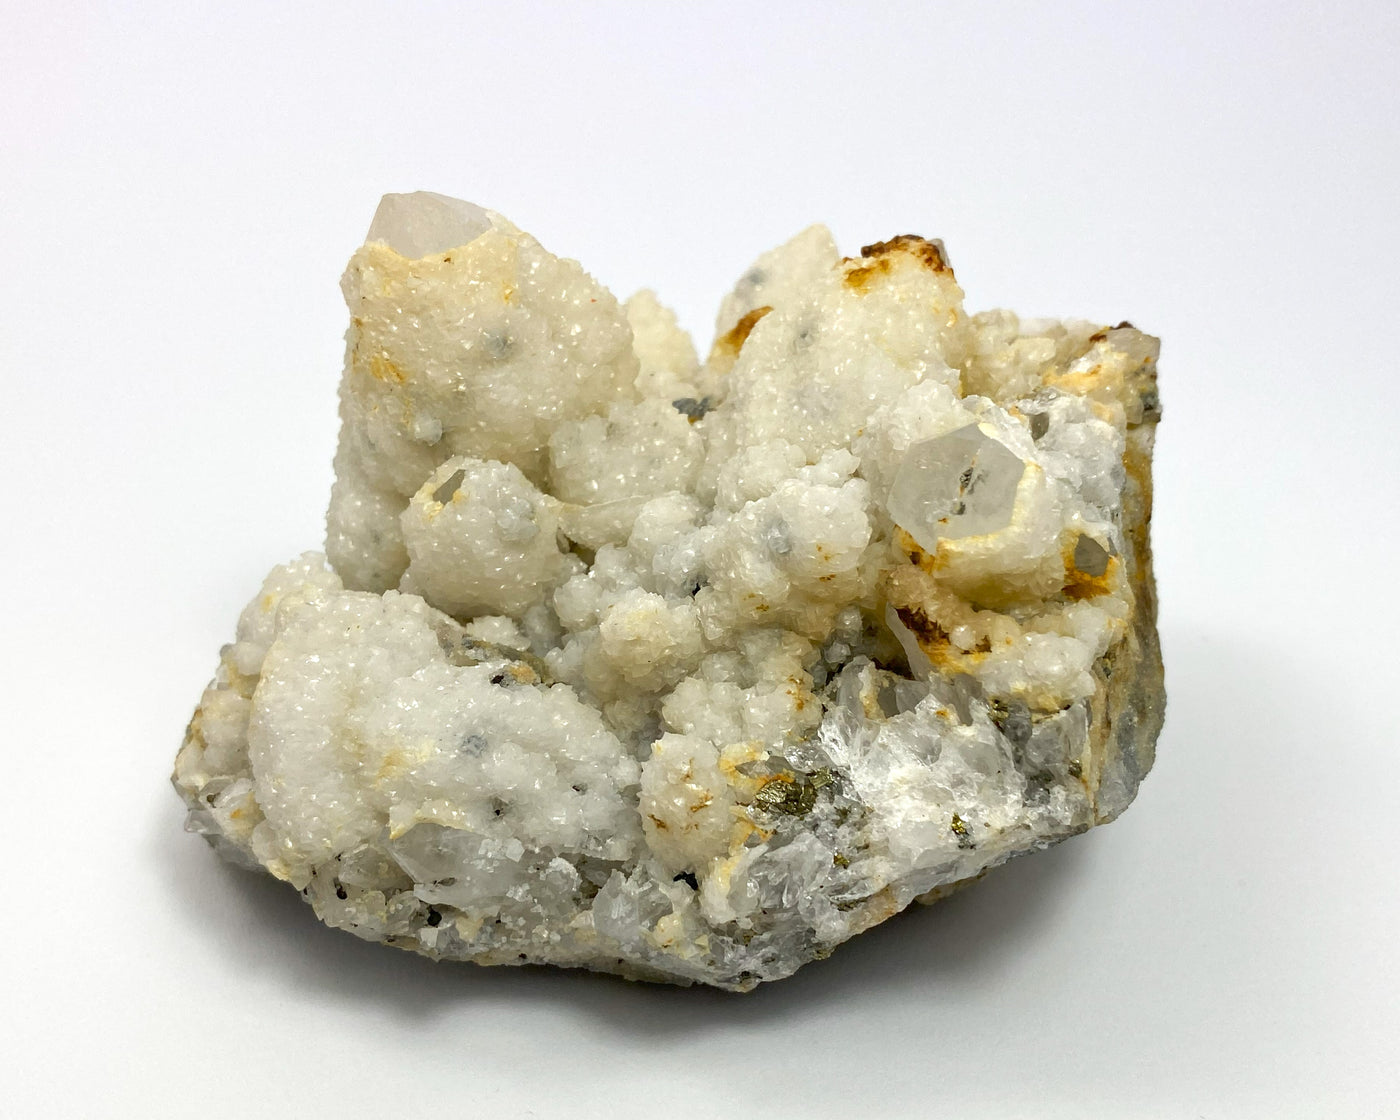 Bergkristall, Dolomit, Cavnic, Maramures, Rumänien